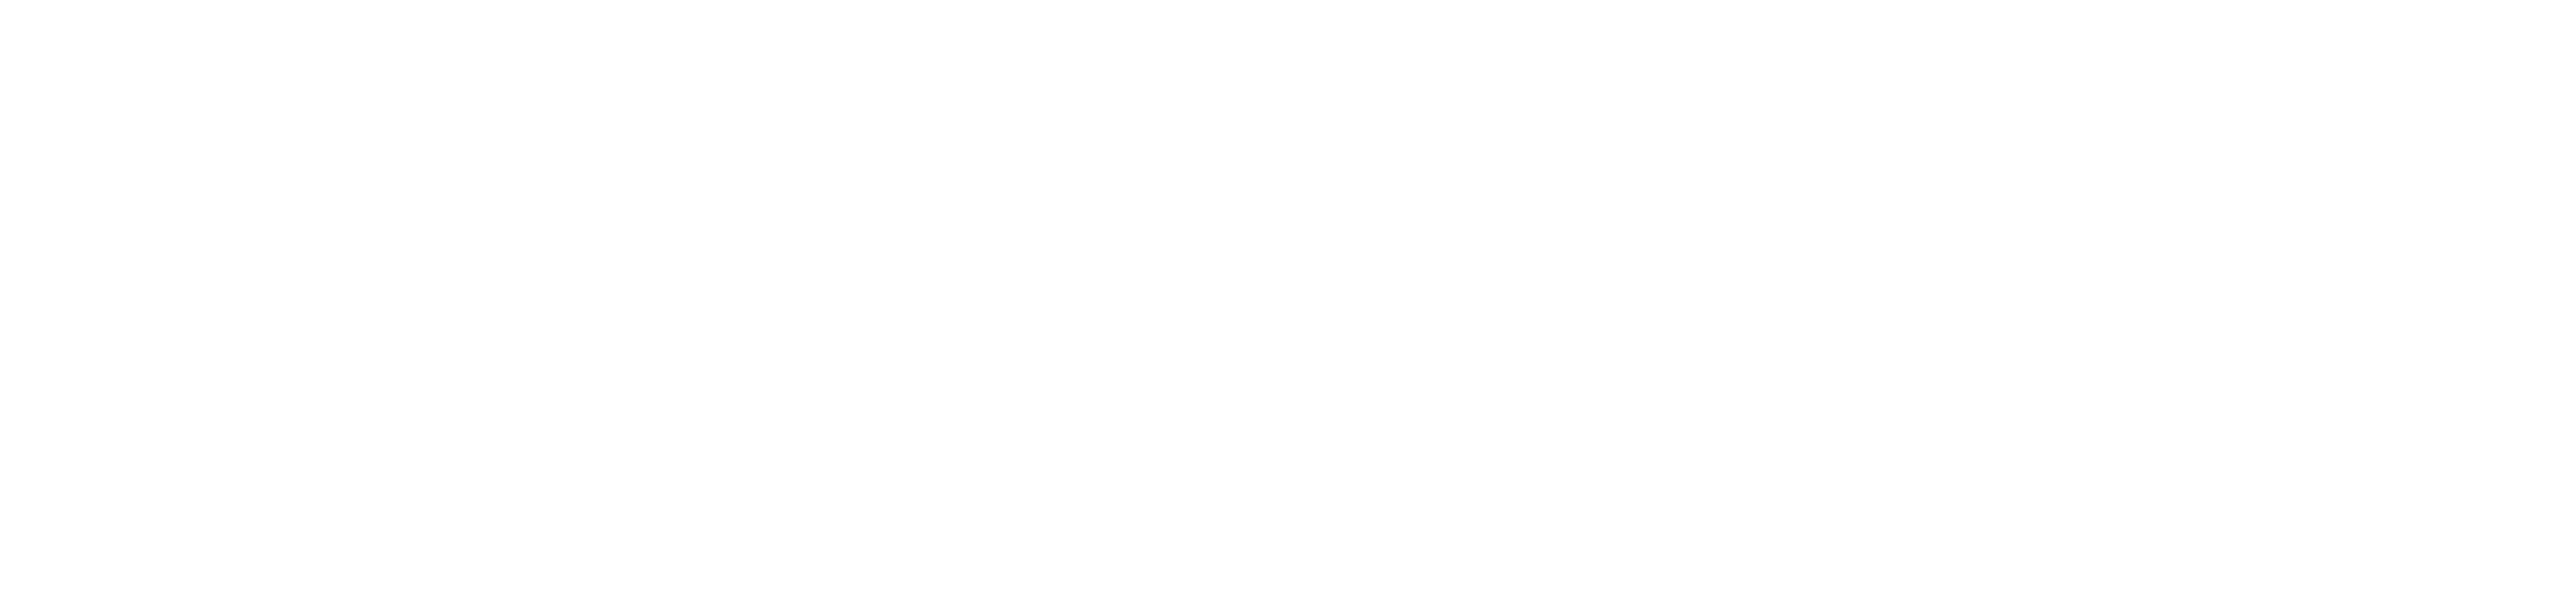 Cedarside Apartments